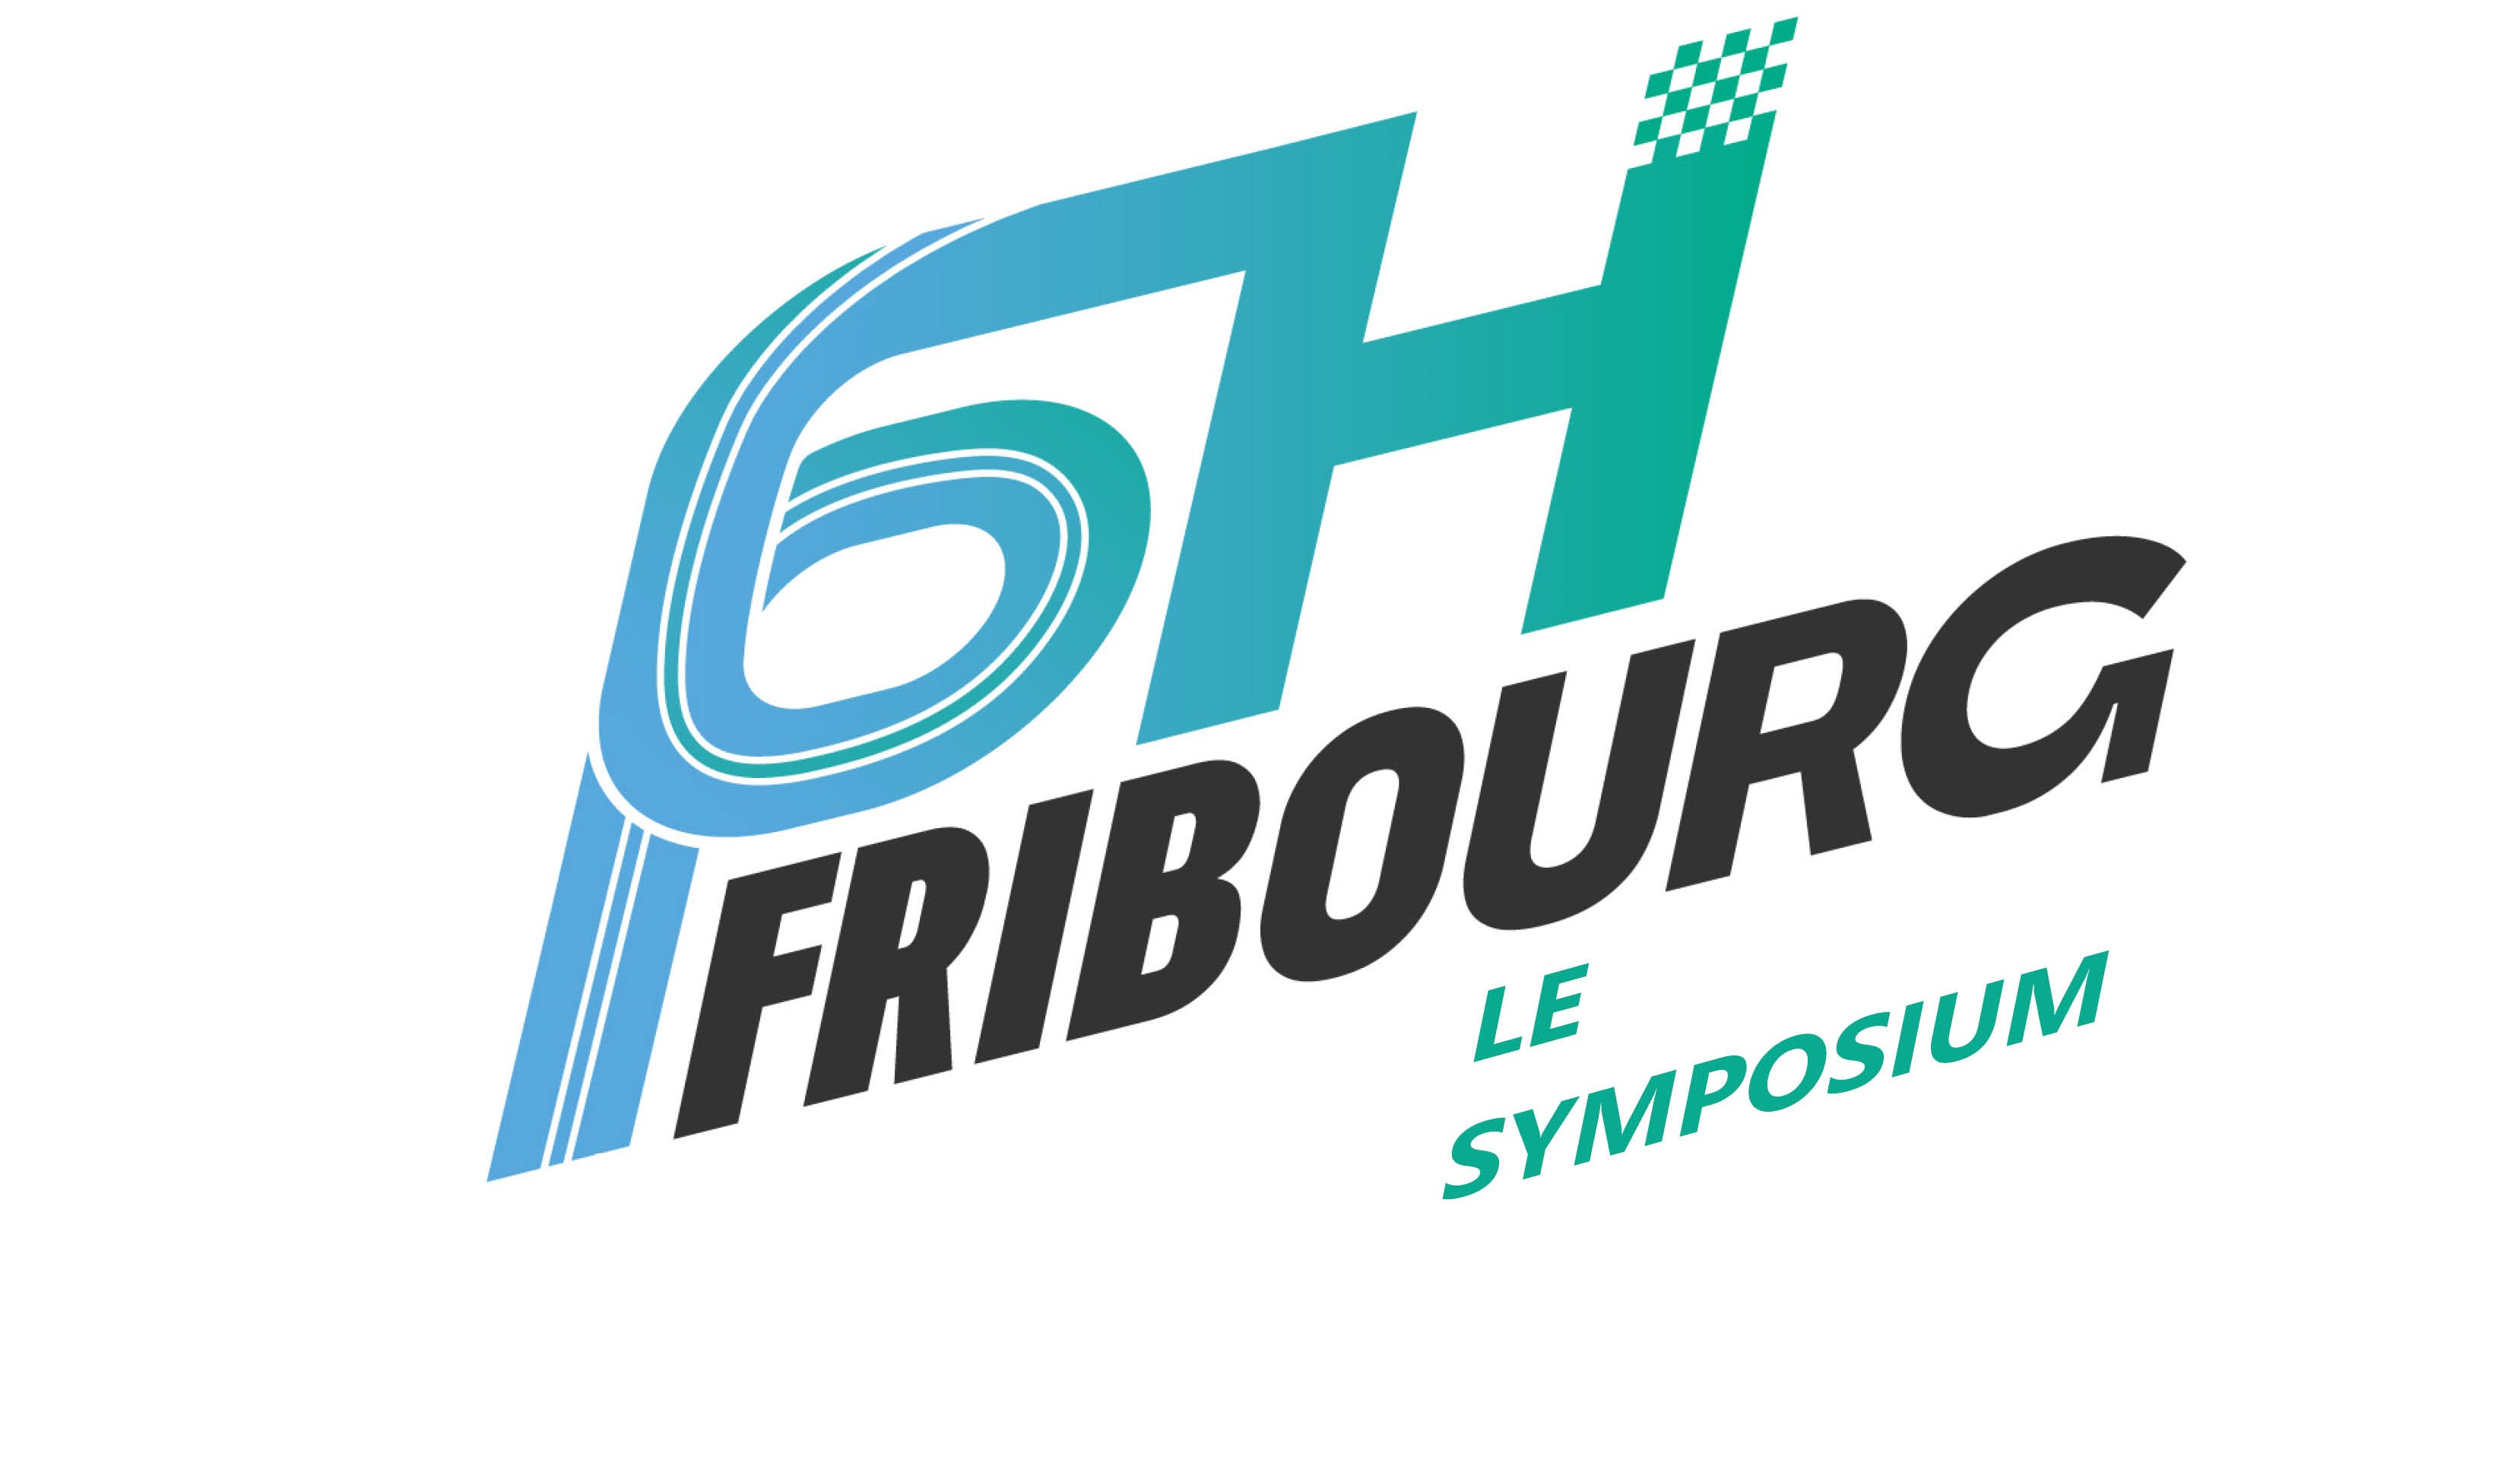 6Heures de Fribourg - Symposium